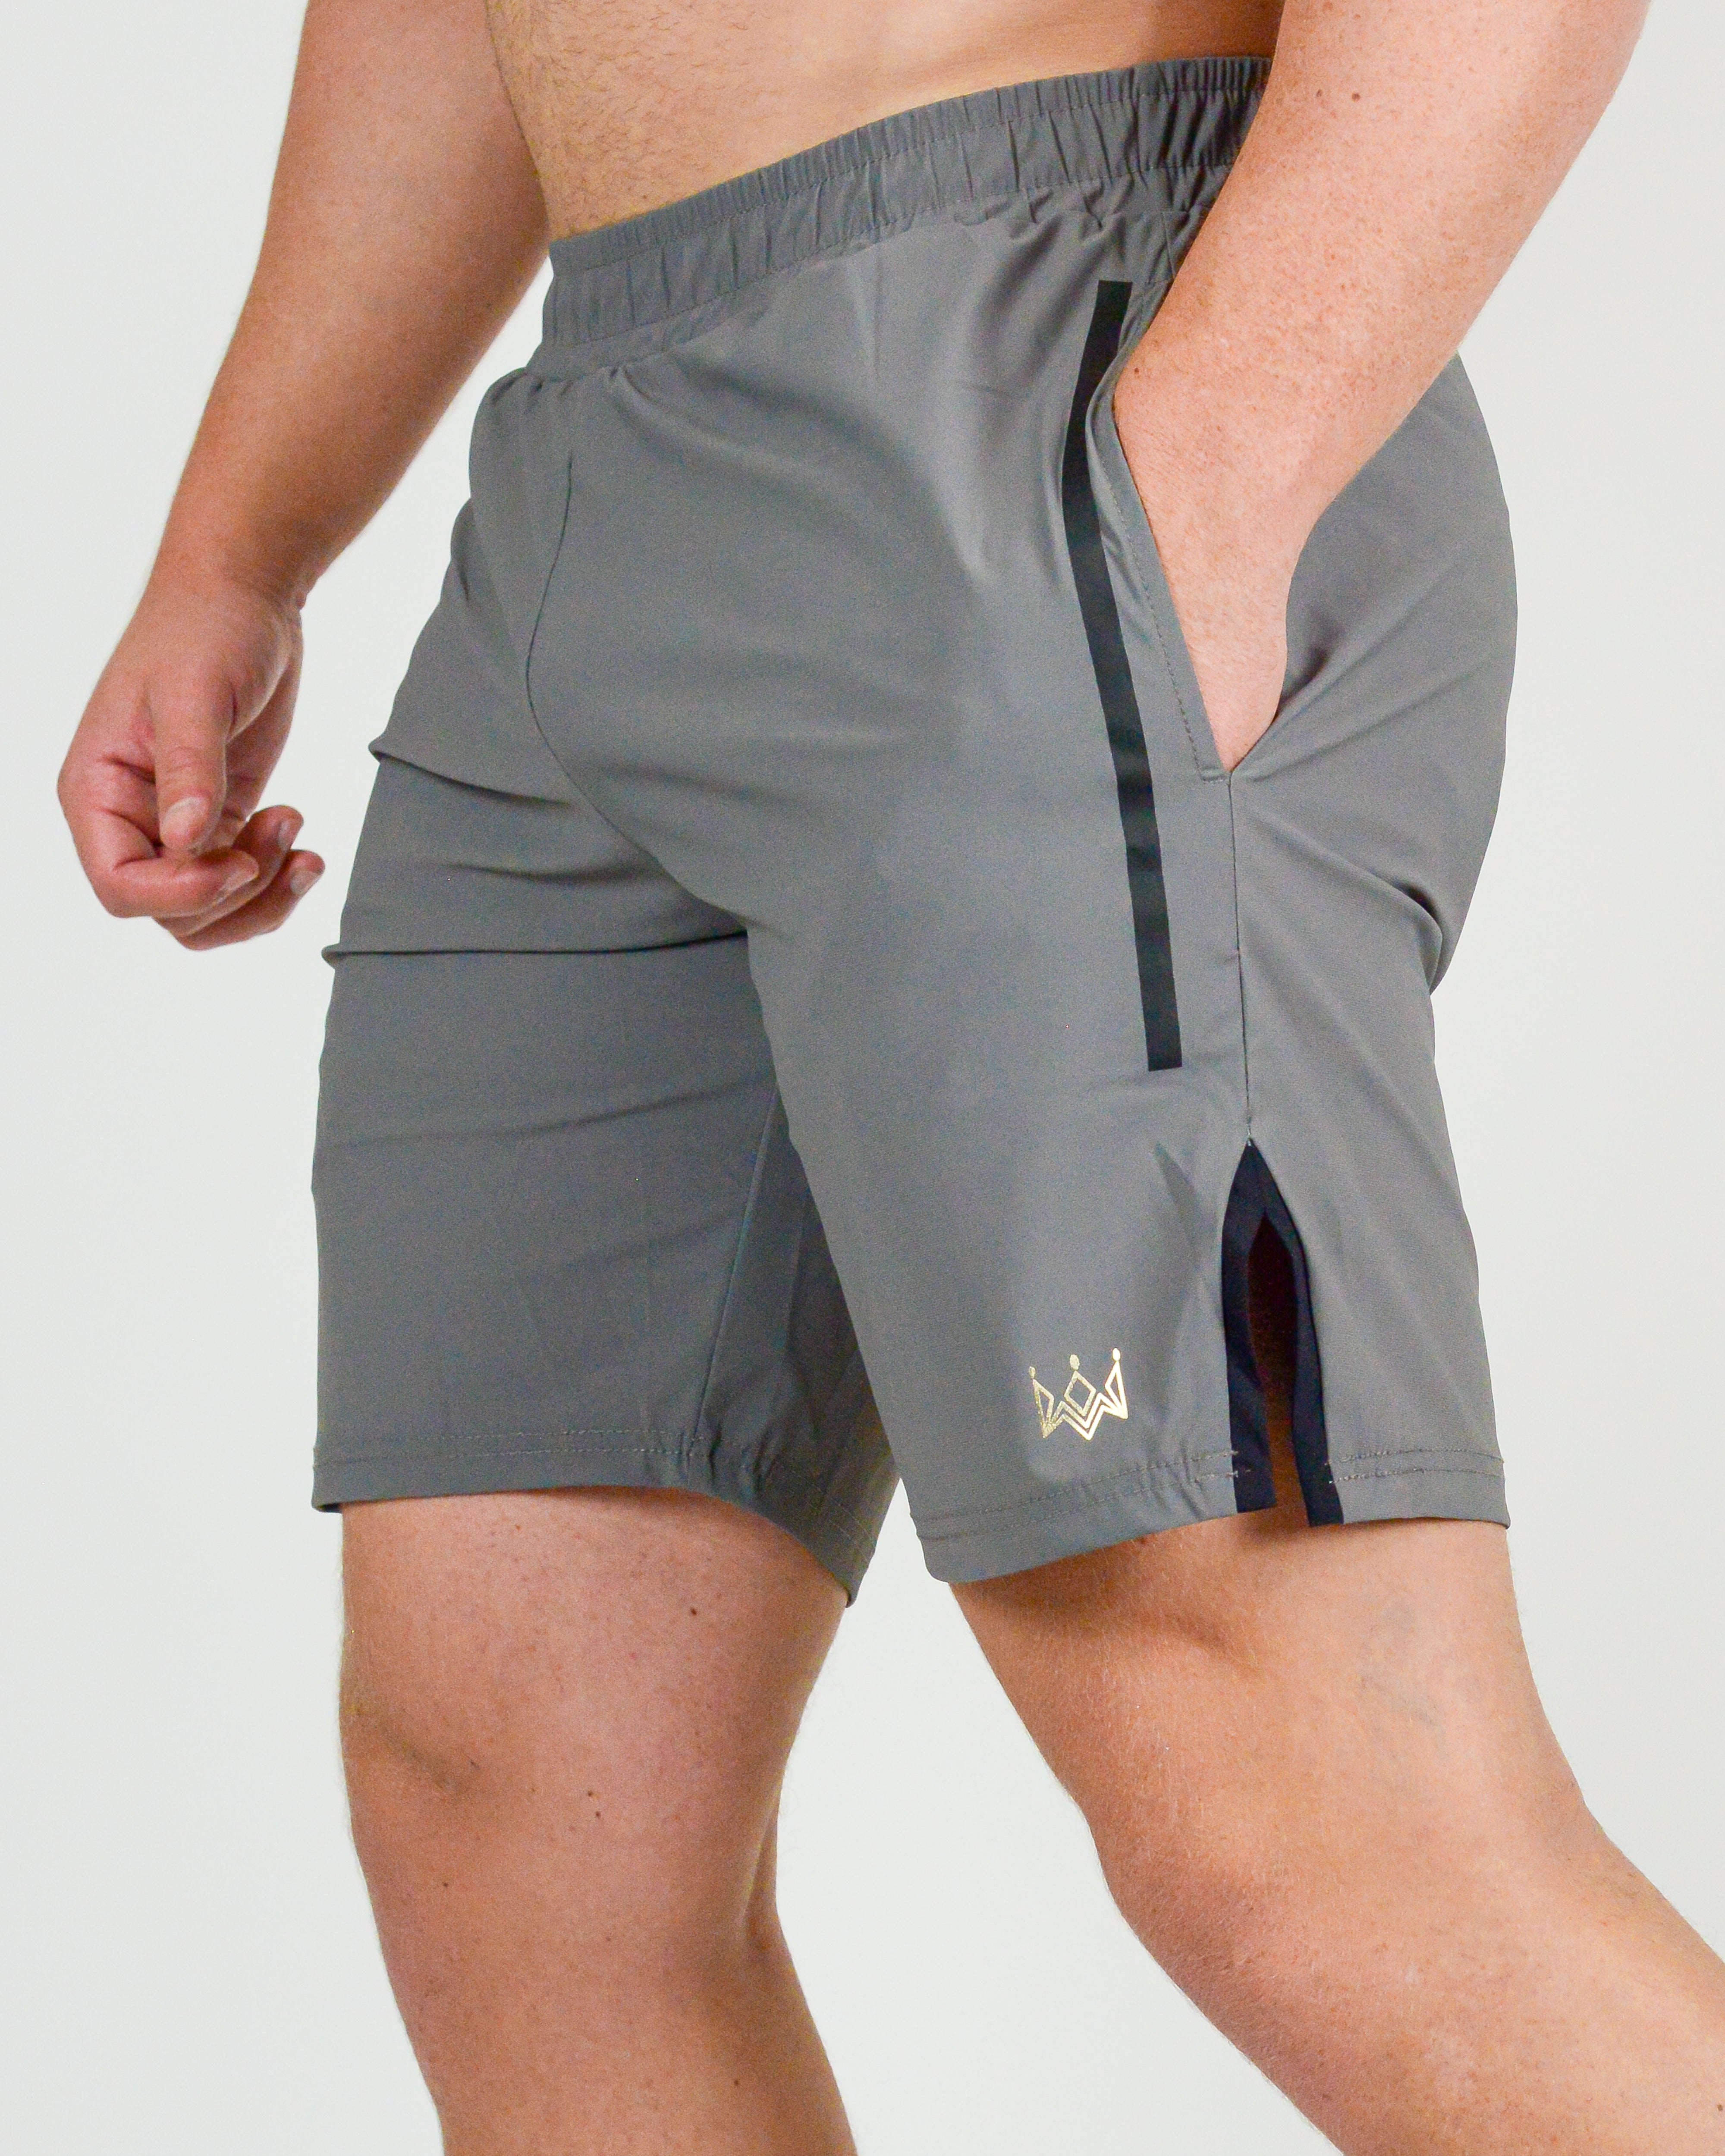 Flex Guard Shorts - Lounge Cut